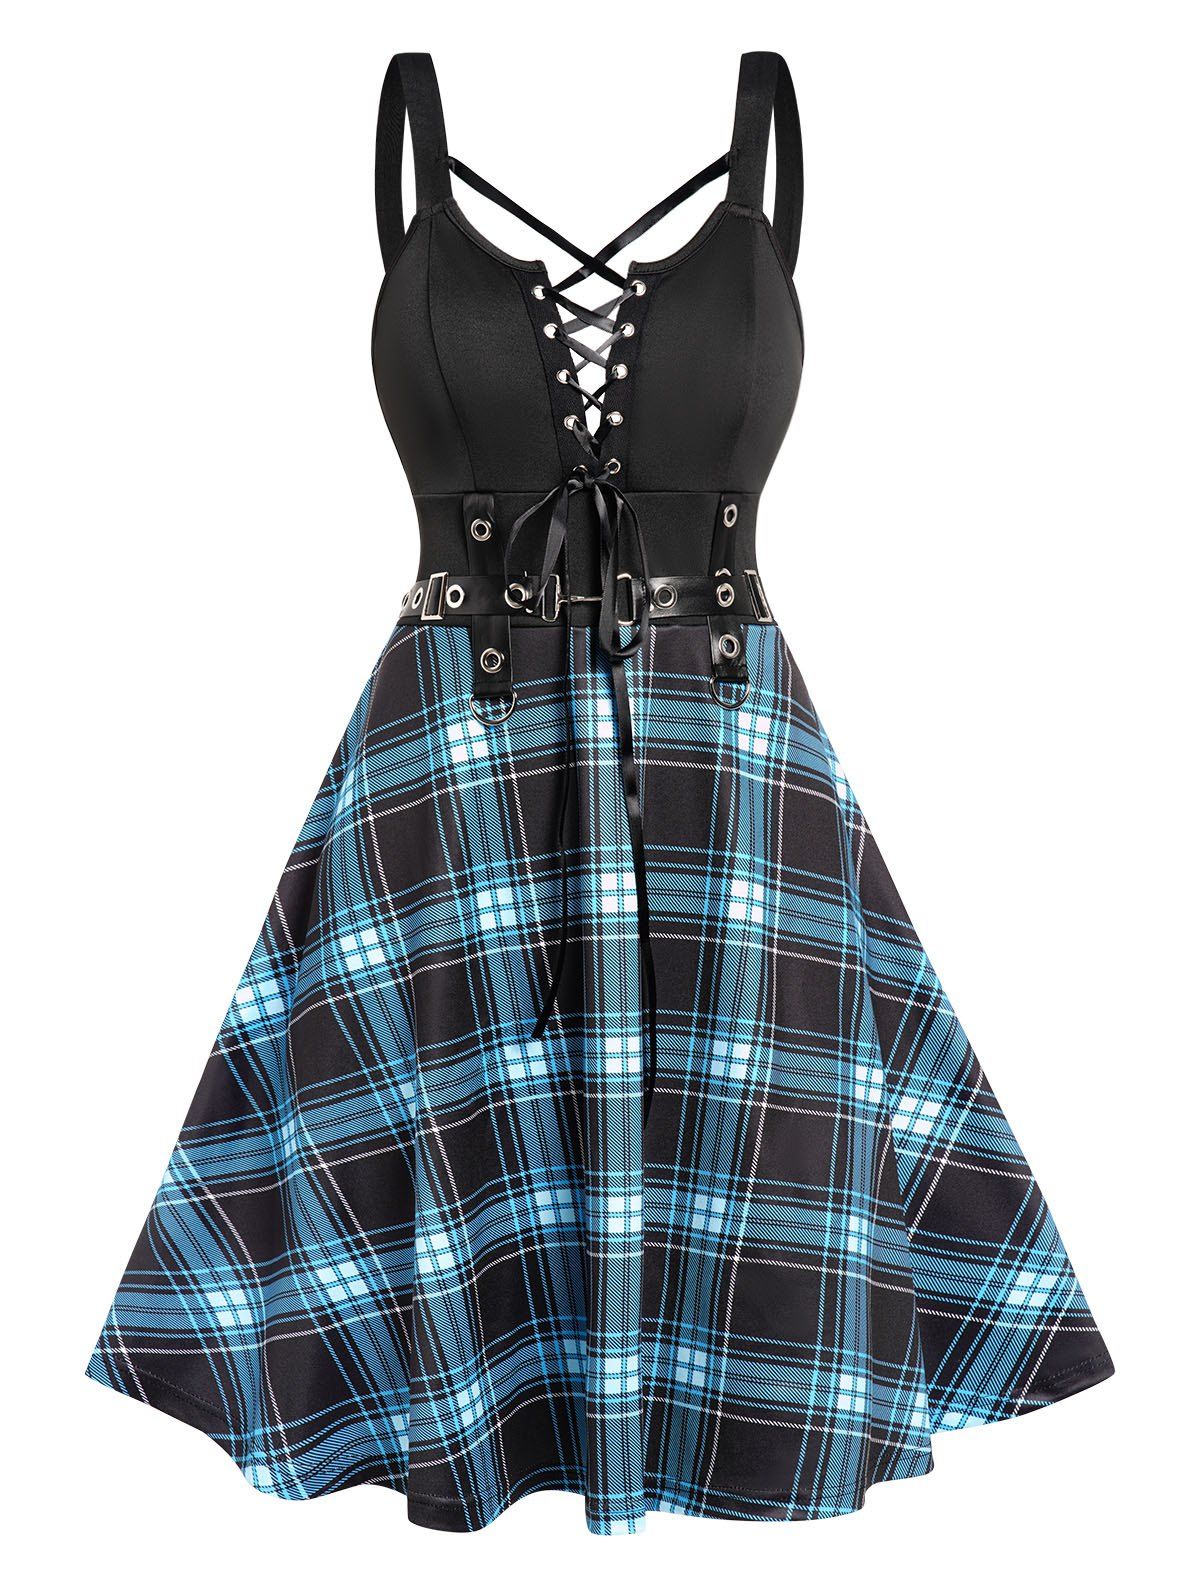 Plaid Print Dress Lace Up Buckle Strap Grommet High Waisted A Line Mini Dress - BLACK XL